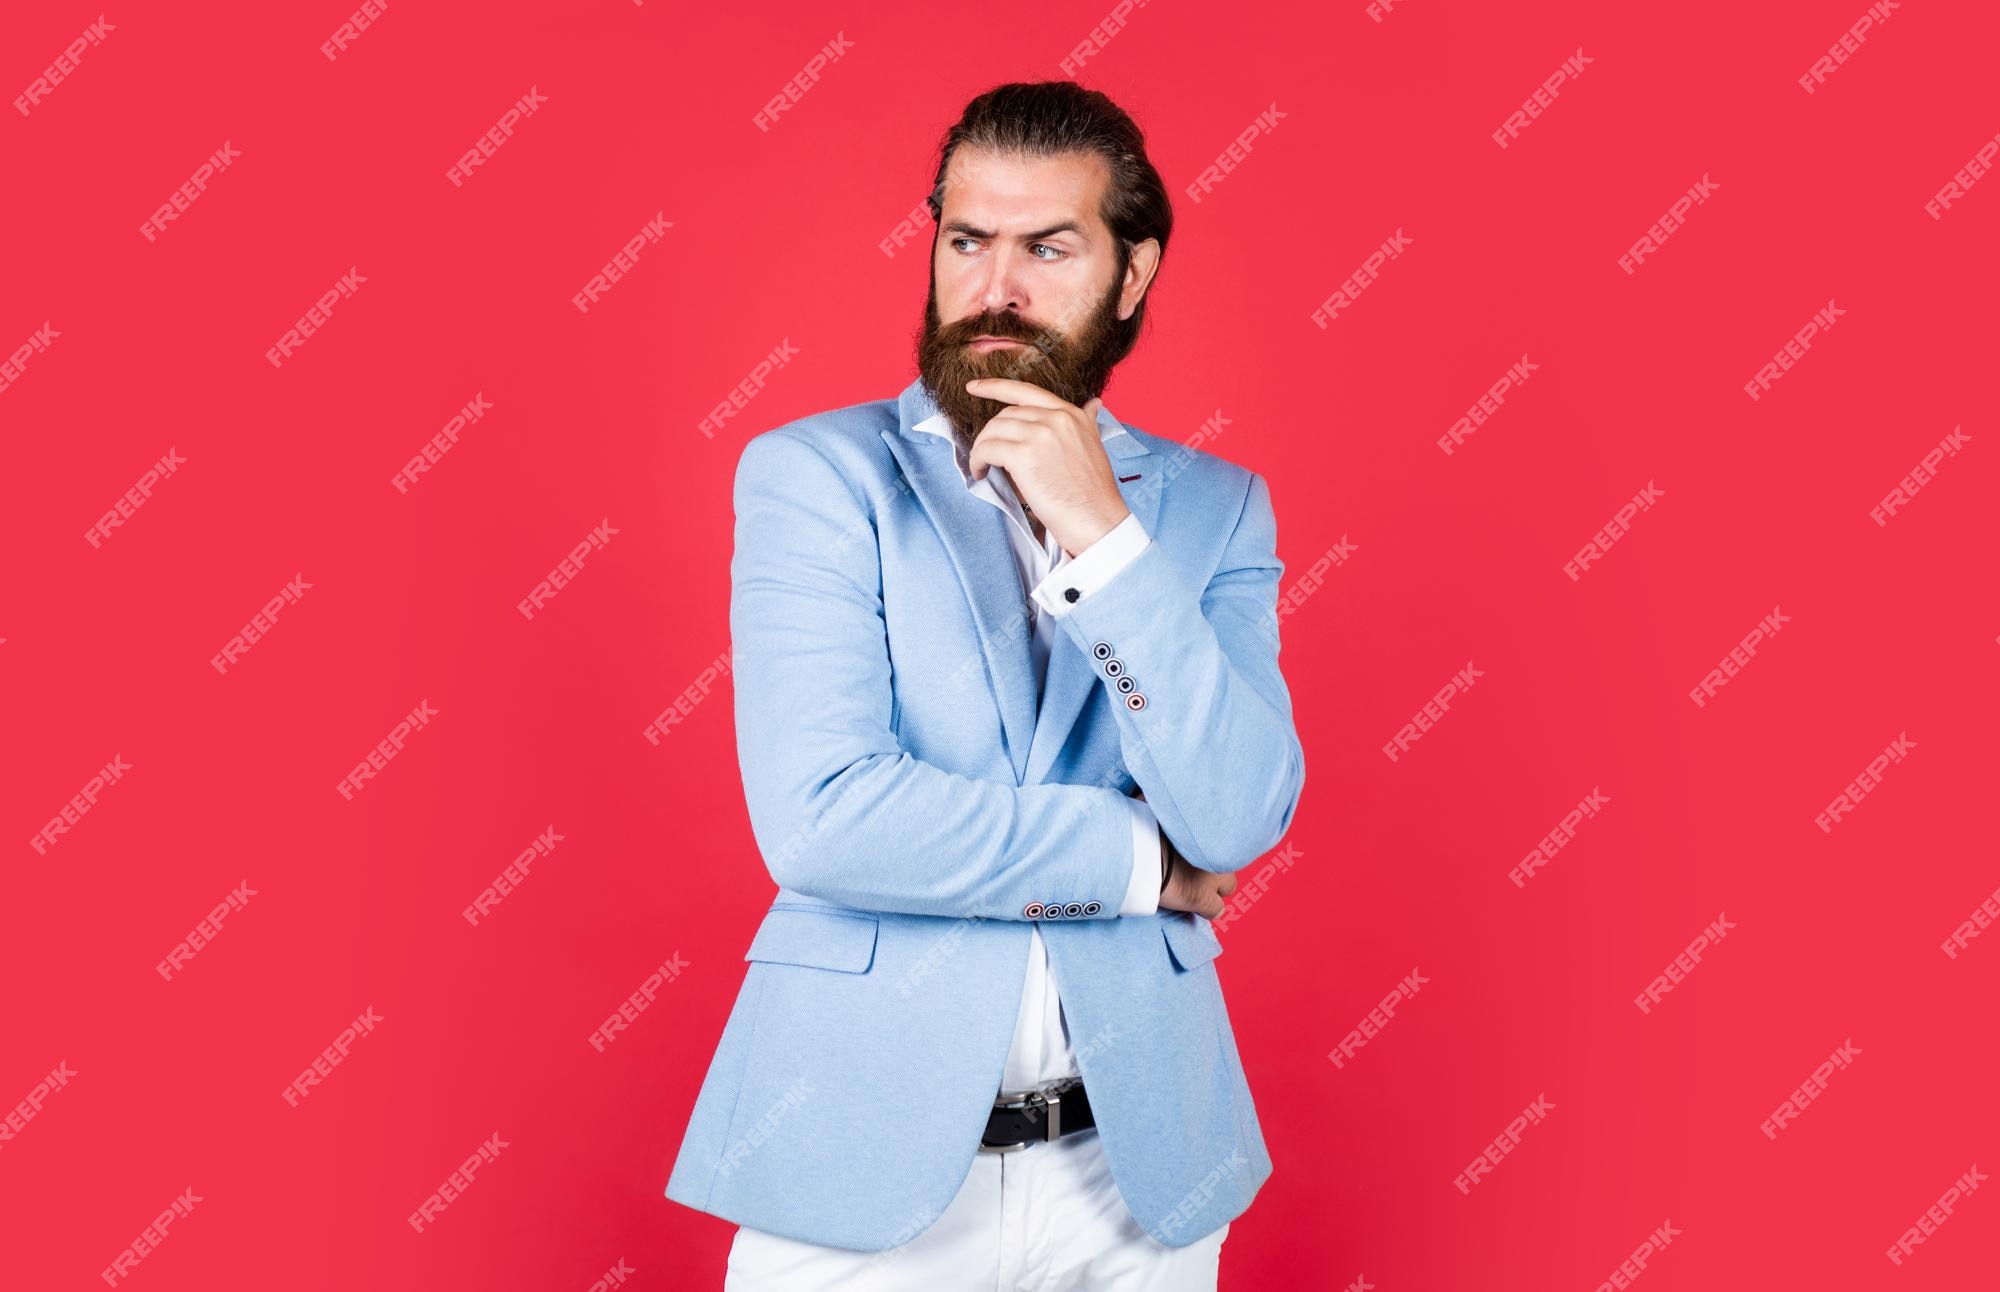 Hombre barbudo en ropa formal hombre de negocios usa ropa elegante para evento formal sommelier verdadero caballero con arreglado belleza masculina y concepto de barbería de moda | Foto Premium